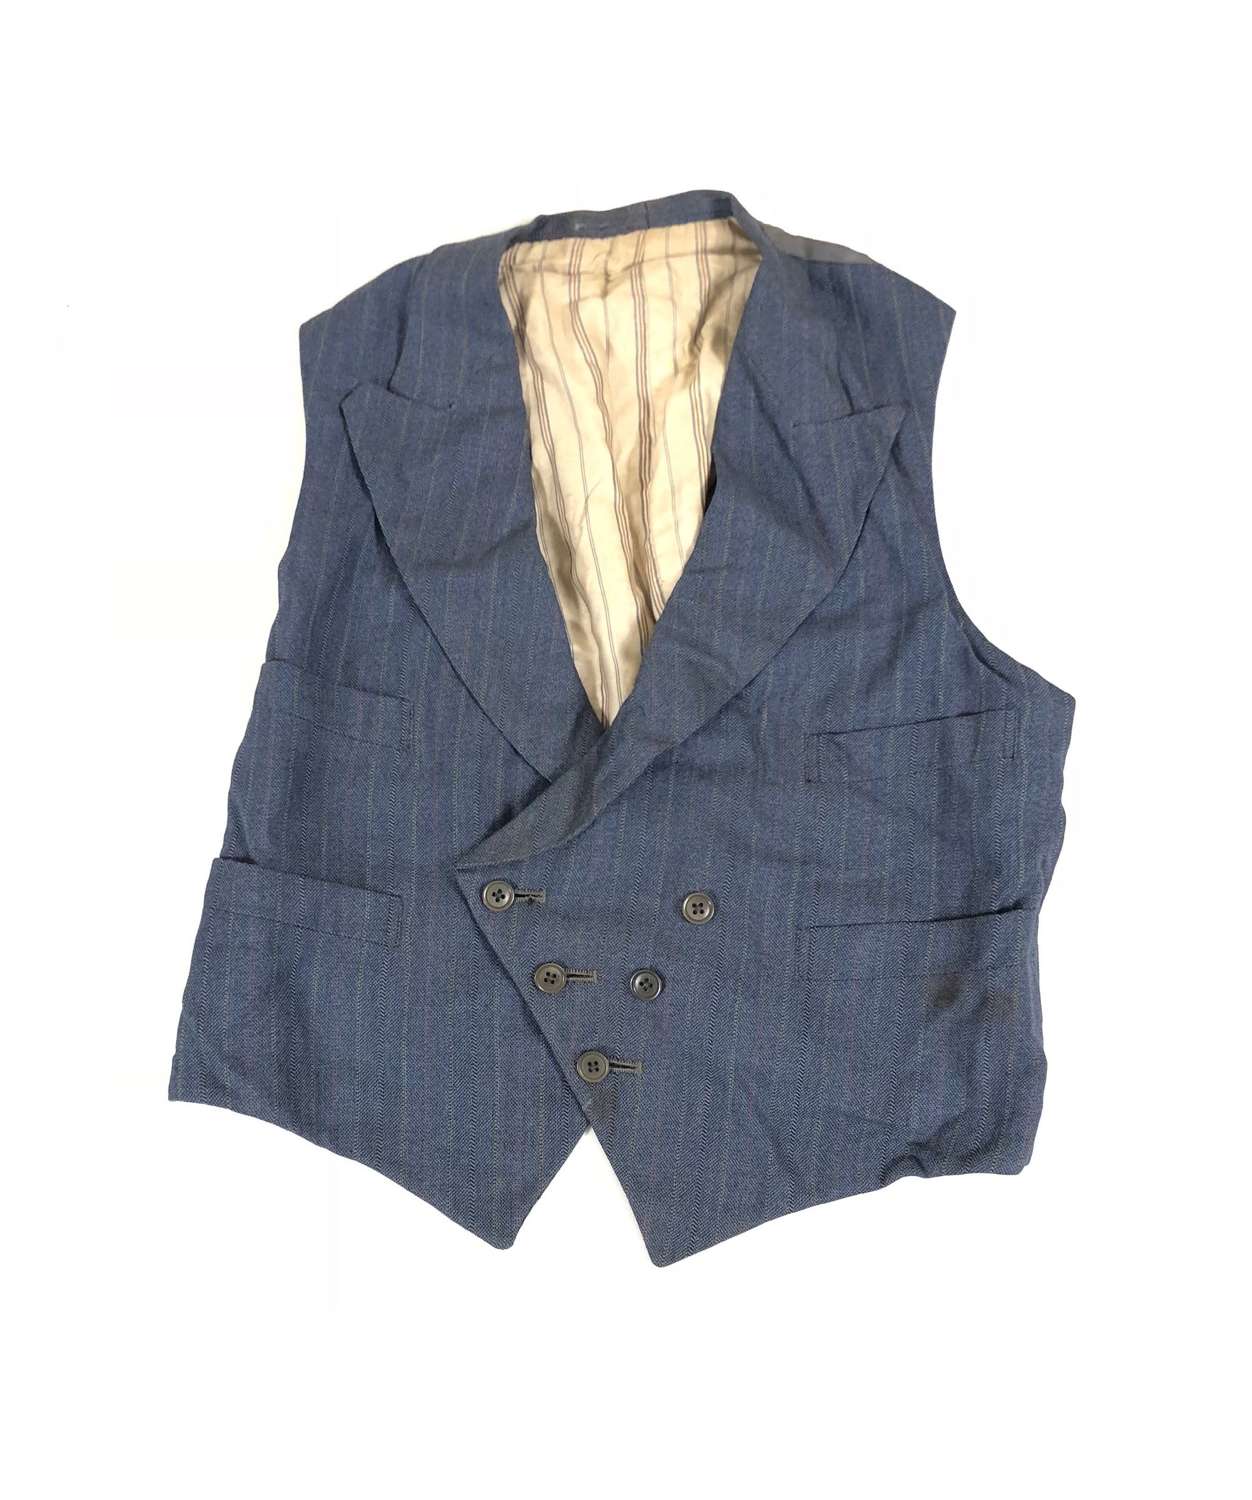 WW2 Vintage Waistcoat Possibly Demob Suit.